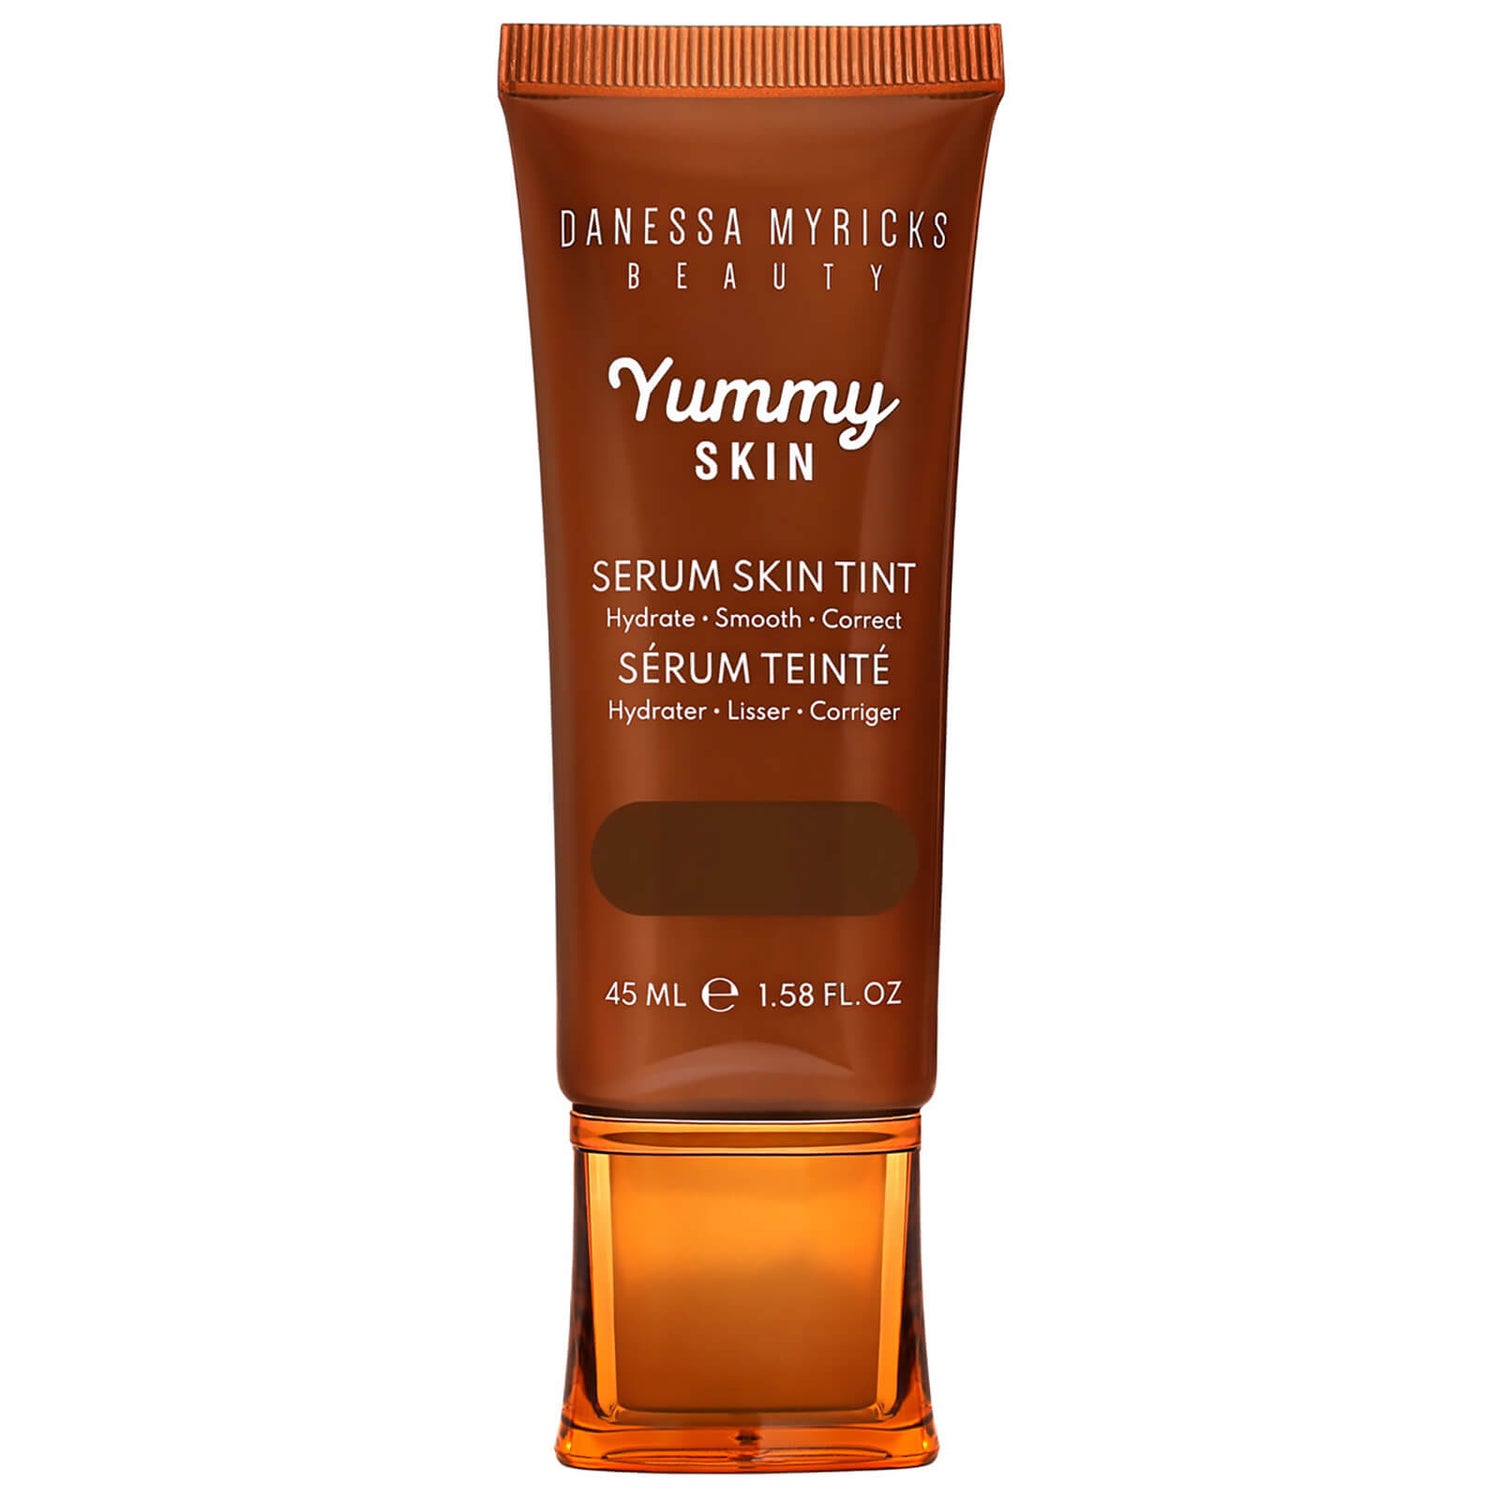 Danessa Myricks Beauty Yummy Skin Serum Skin Tint 45ml (Various Shades)